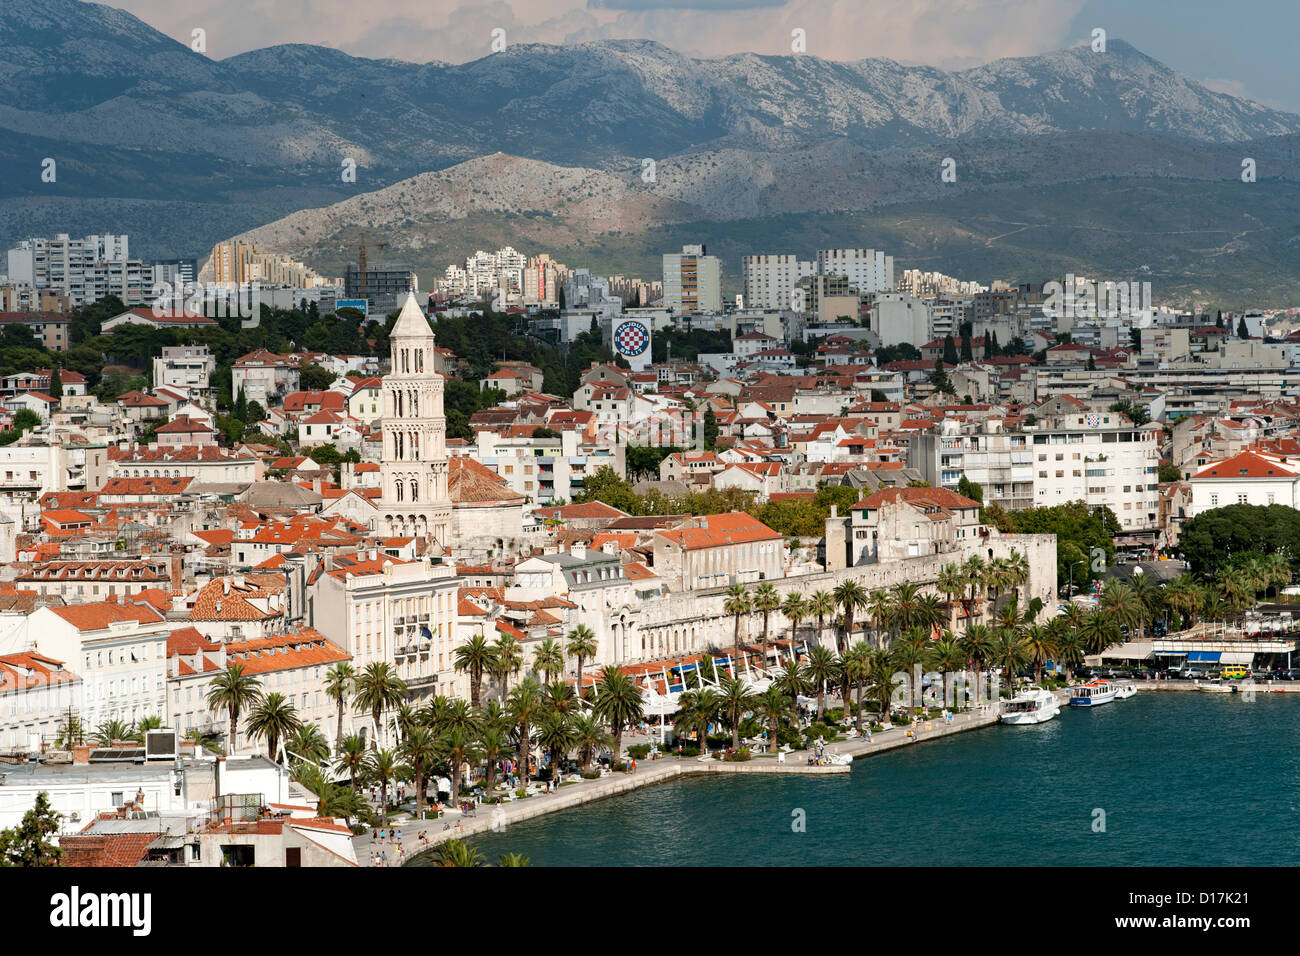 View of the city of Split on the Adriatic coast of Croatia. Stock Photo